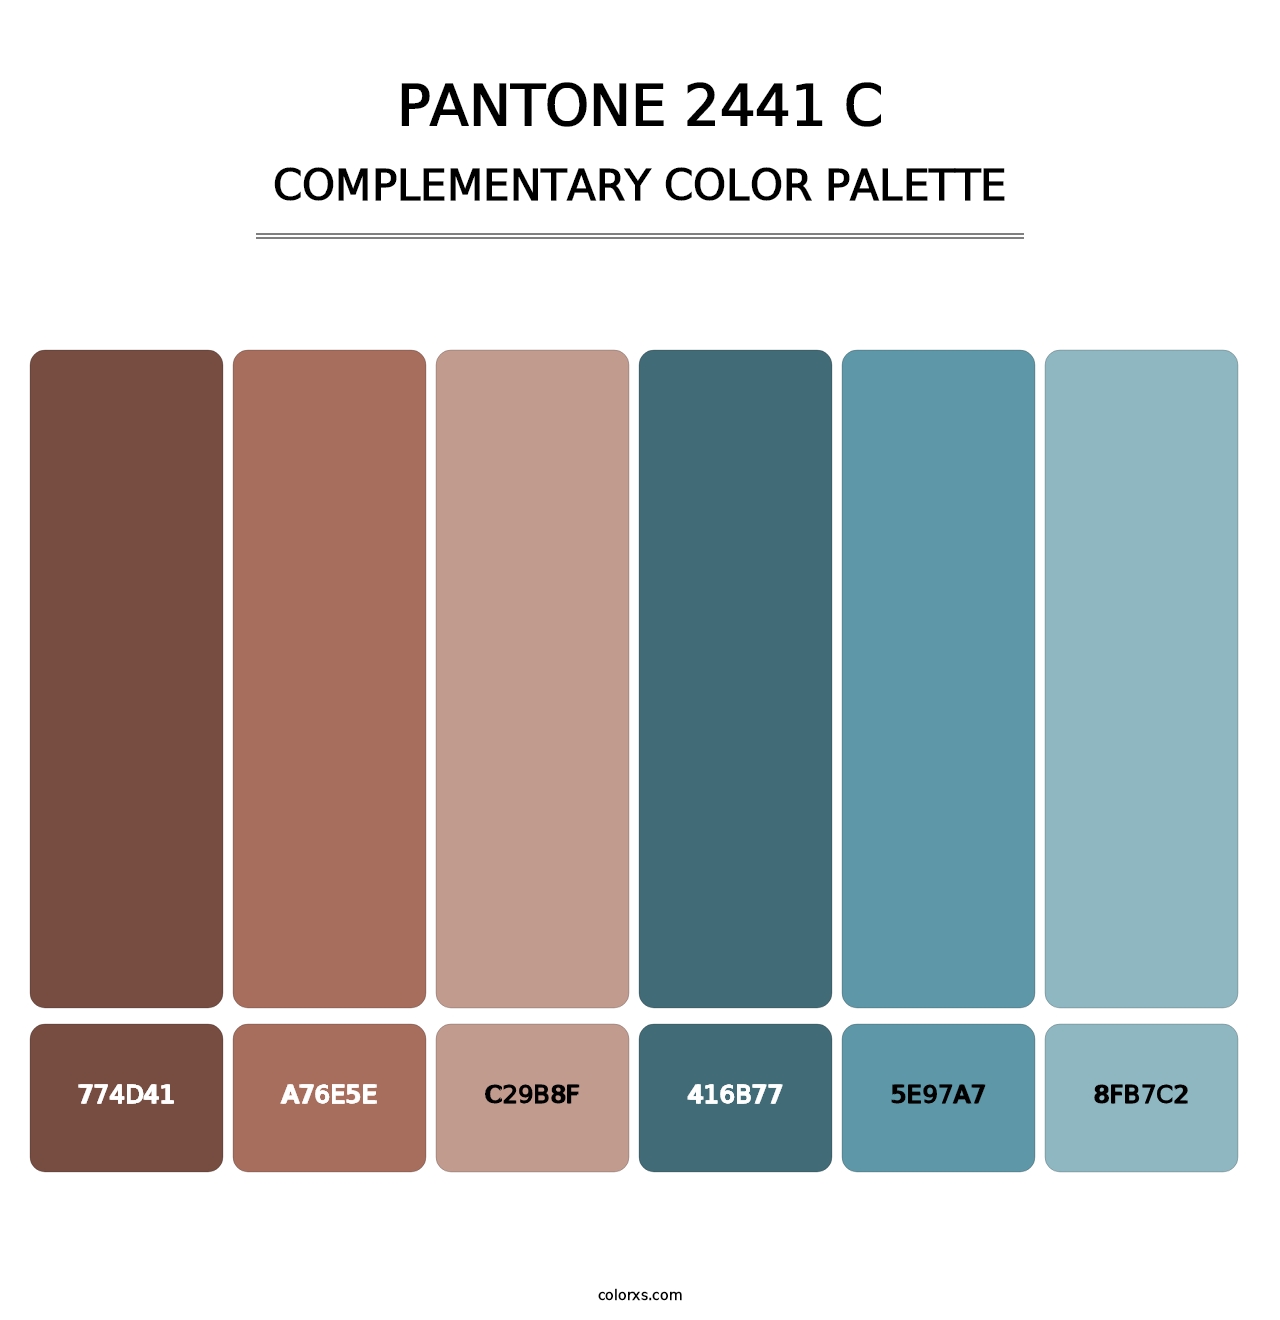 PANTONE 2441 C - Complementary Color Palette